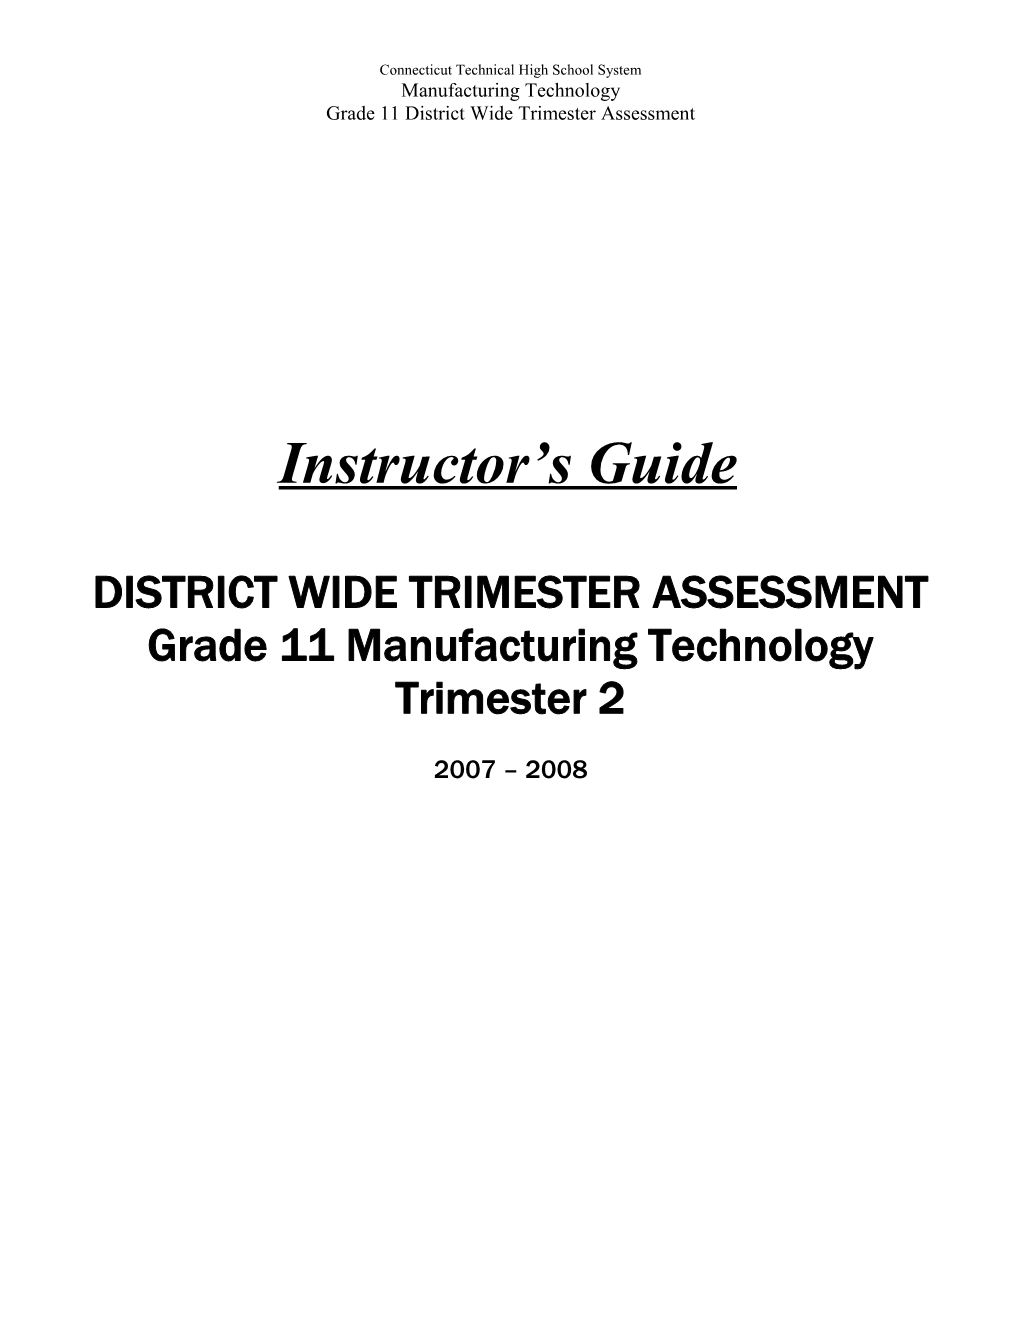 Grade 11 District Wide Trimester Assessment